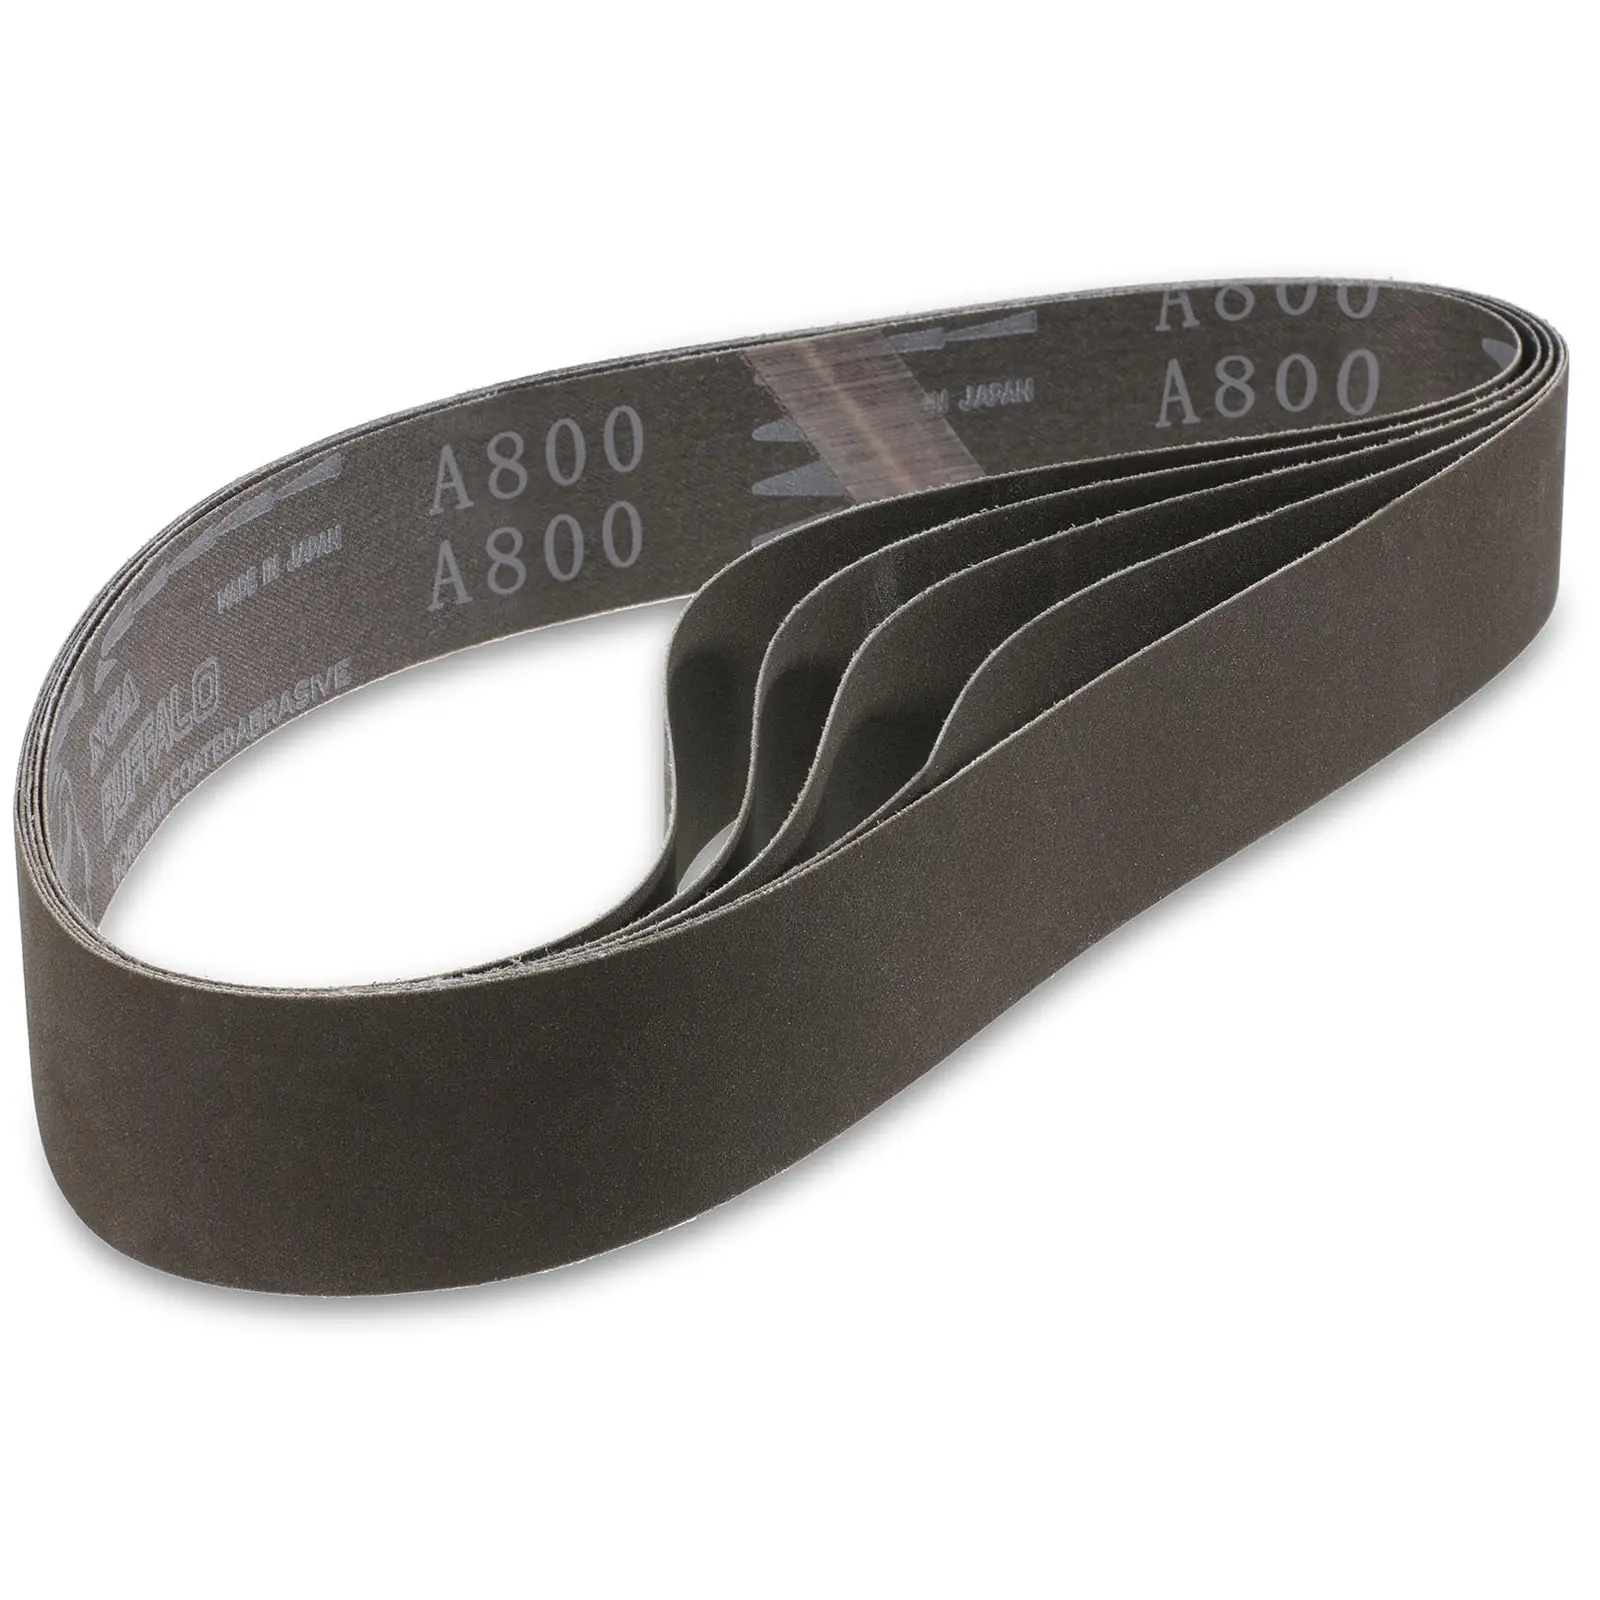 Slipband - 760 x 40 mm - korn 800